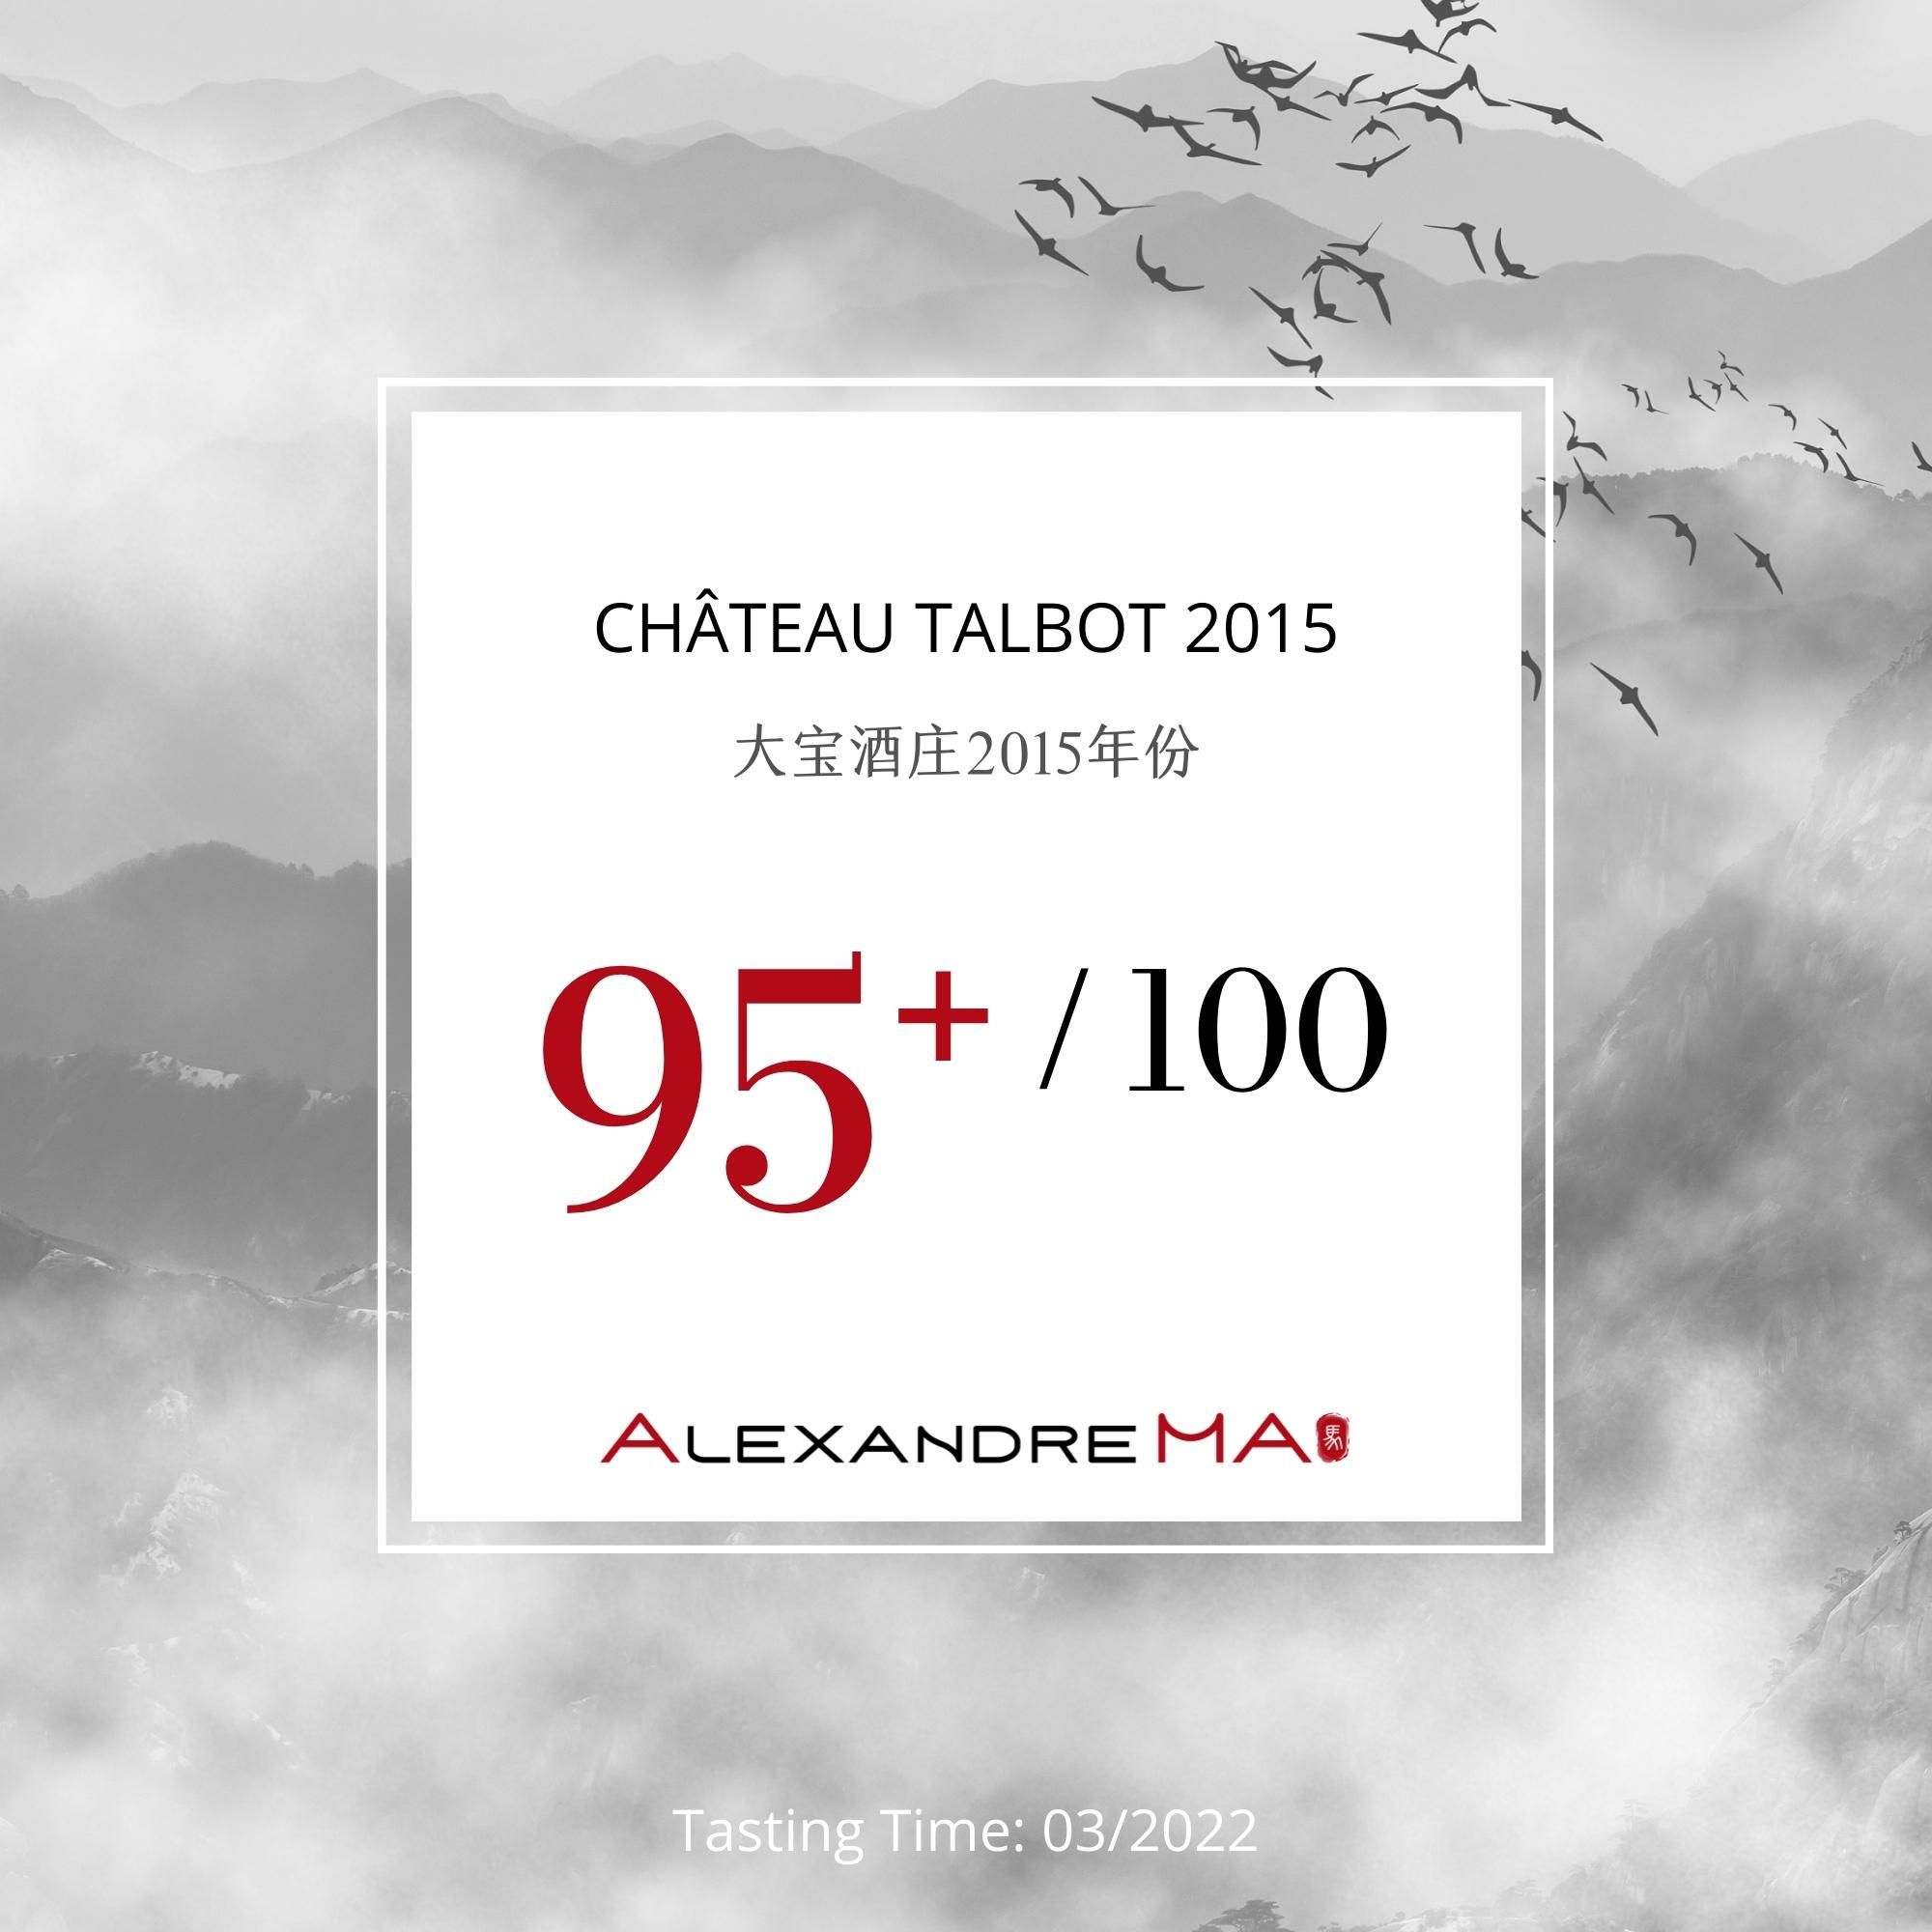 Château Talbot 大宝酒庄 2015 - Alexandre Ma